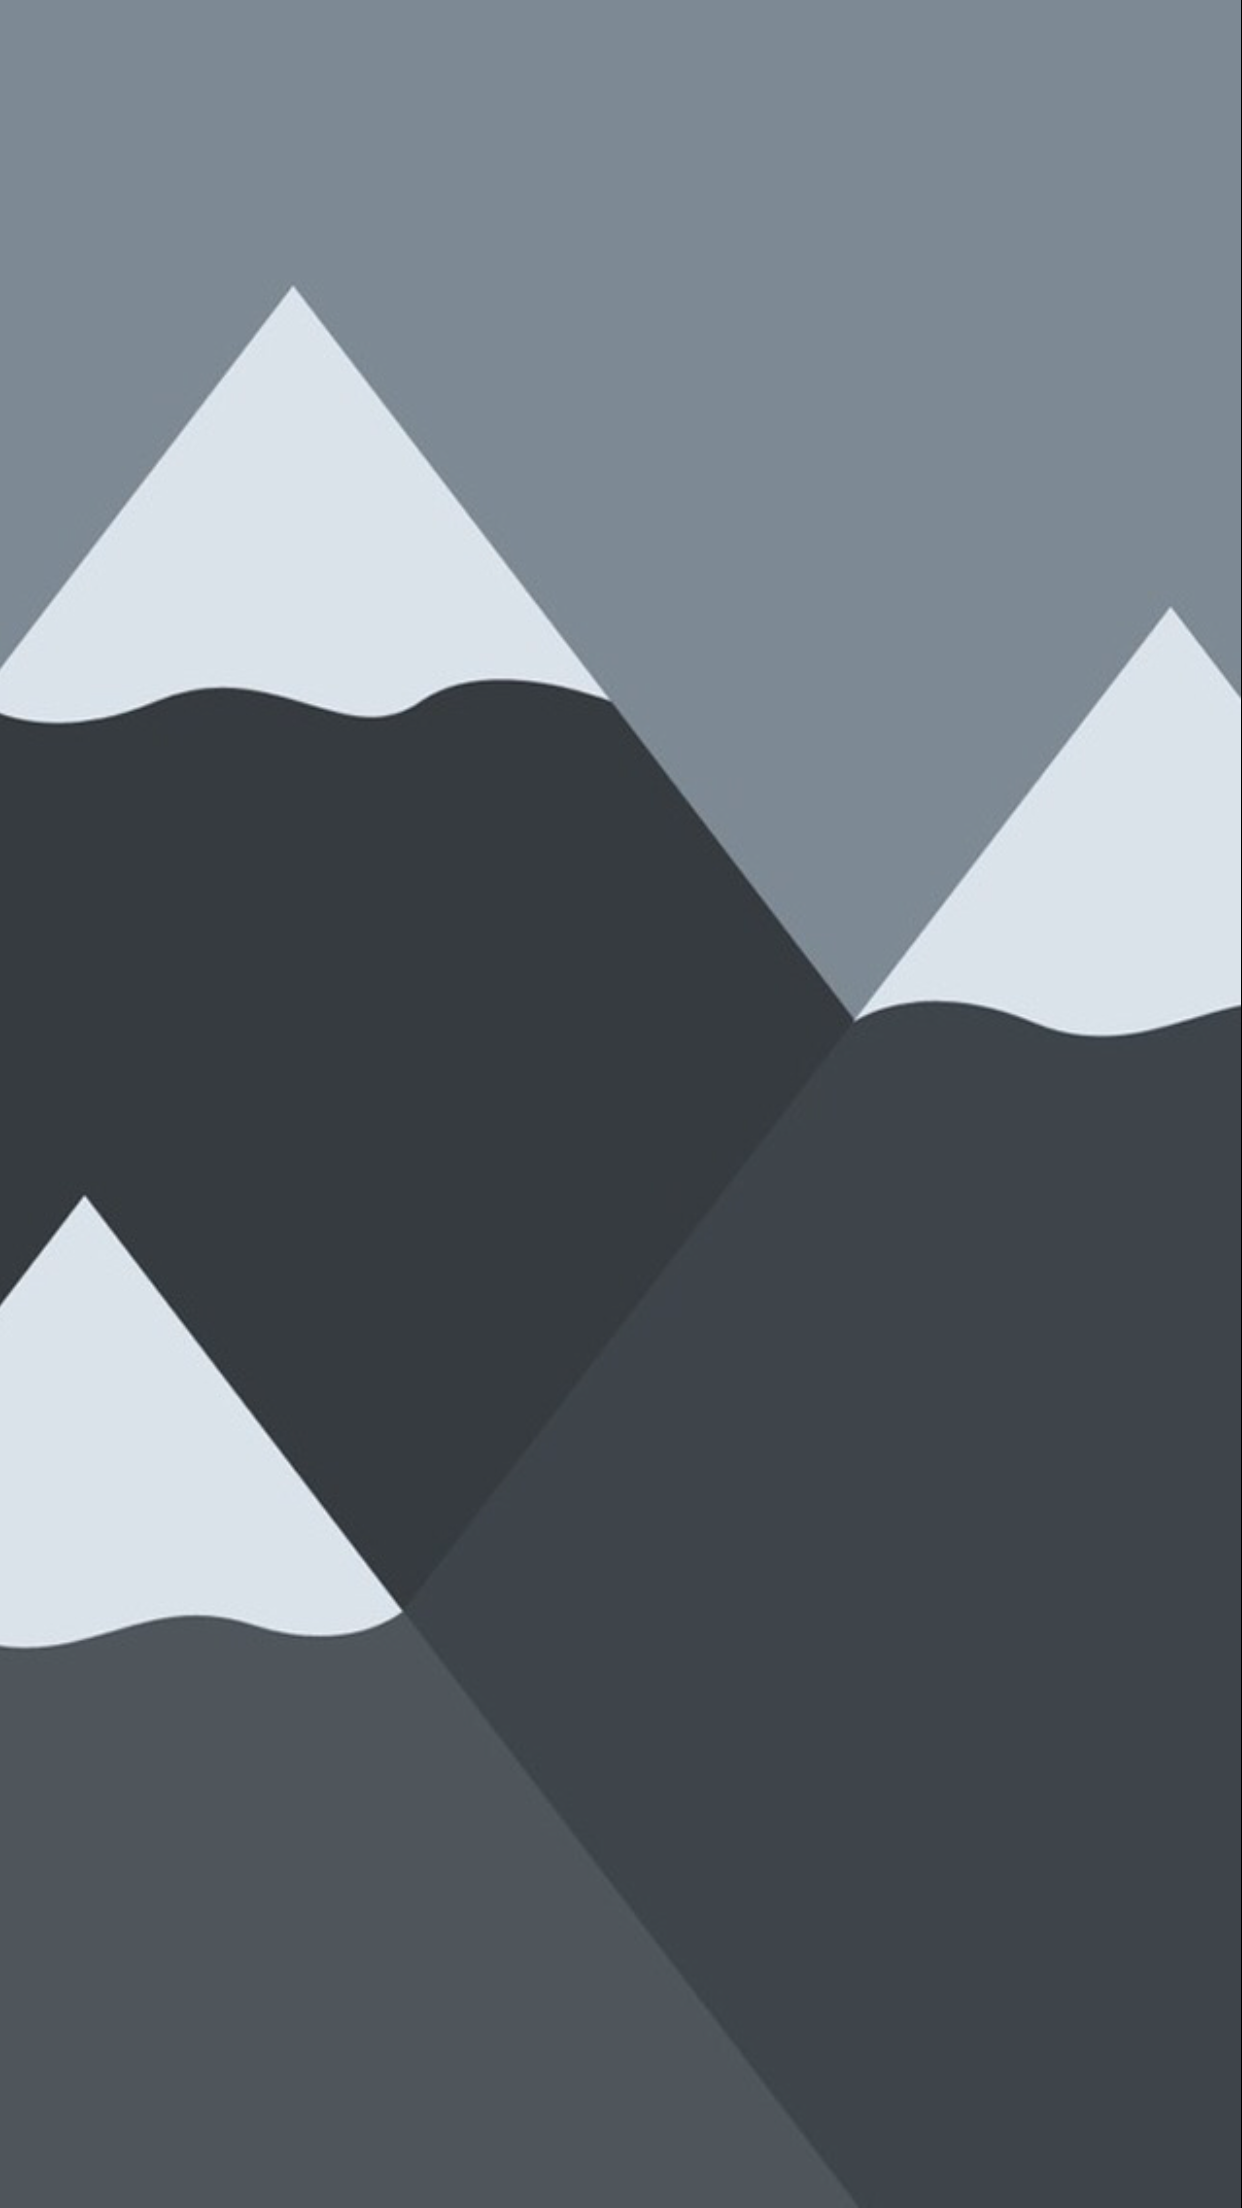 Wallpaper iPhone 6 Plus Mountain Minimal. iPhone minimalist